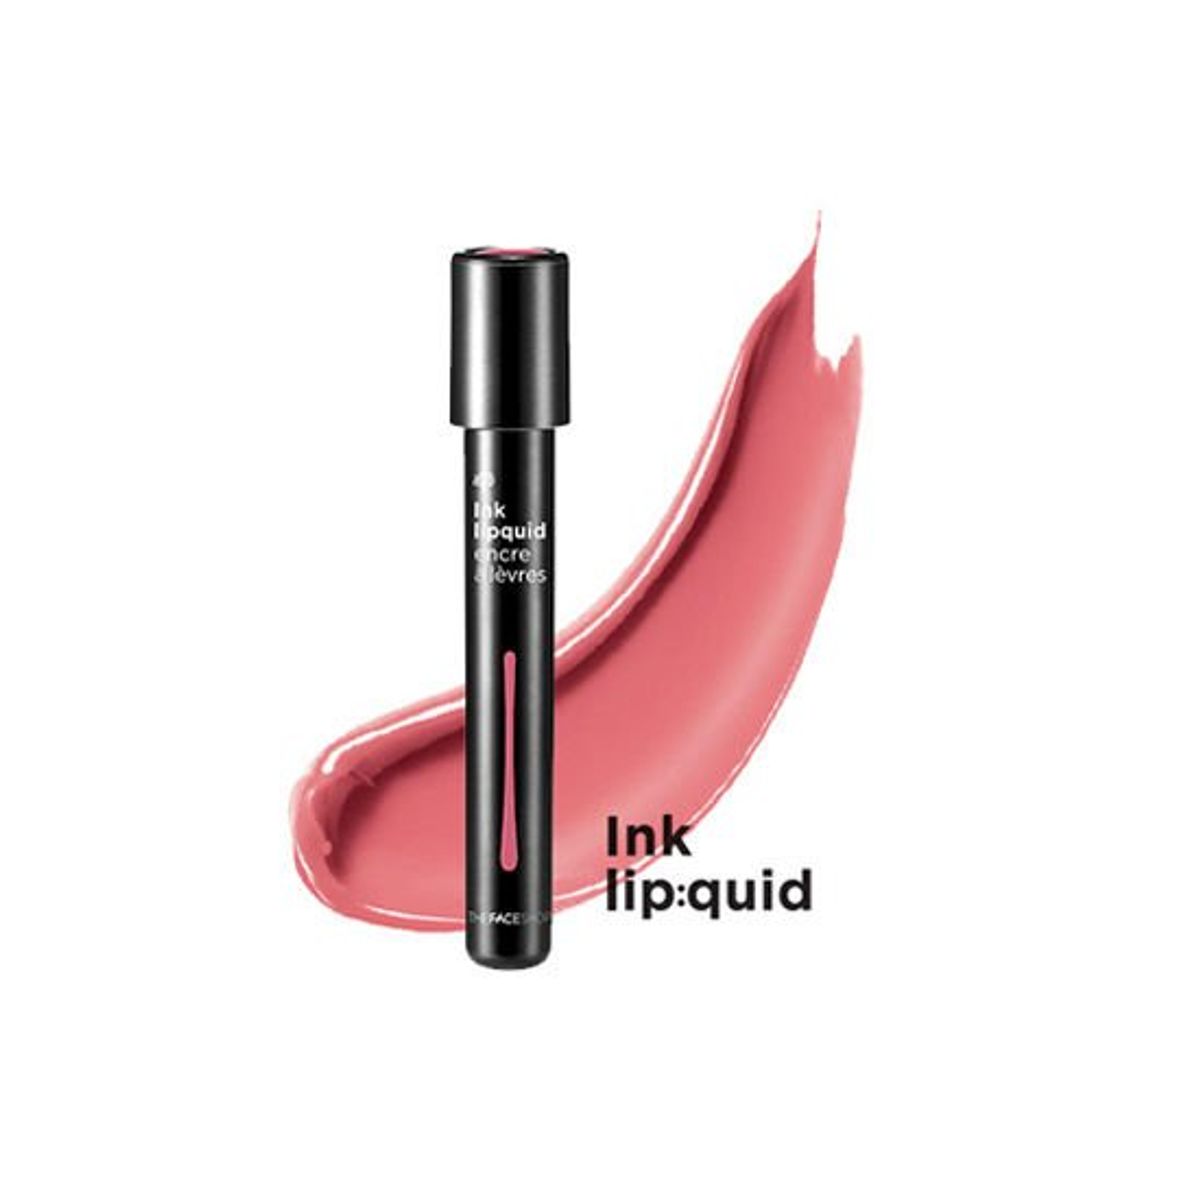 ink-lipquid-moisture-1